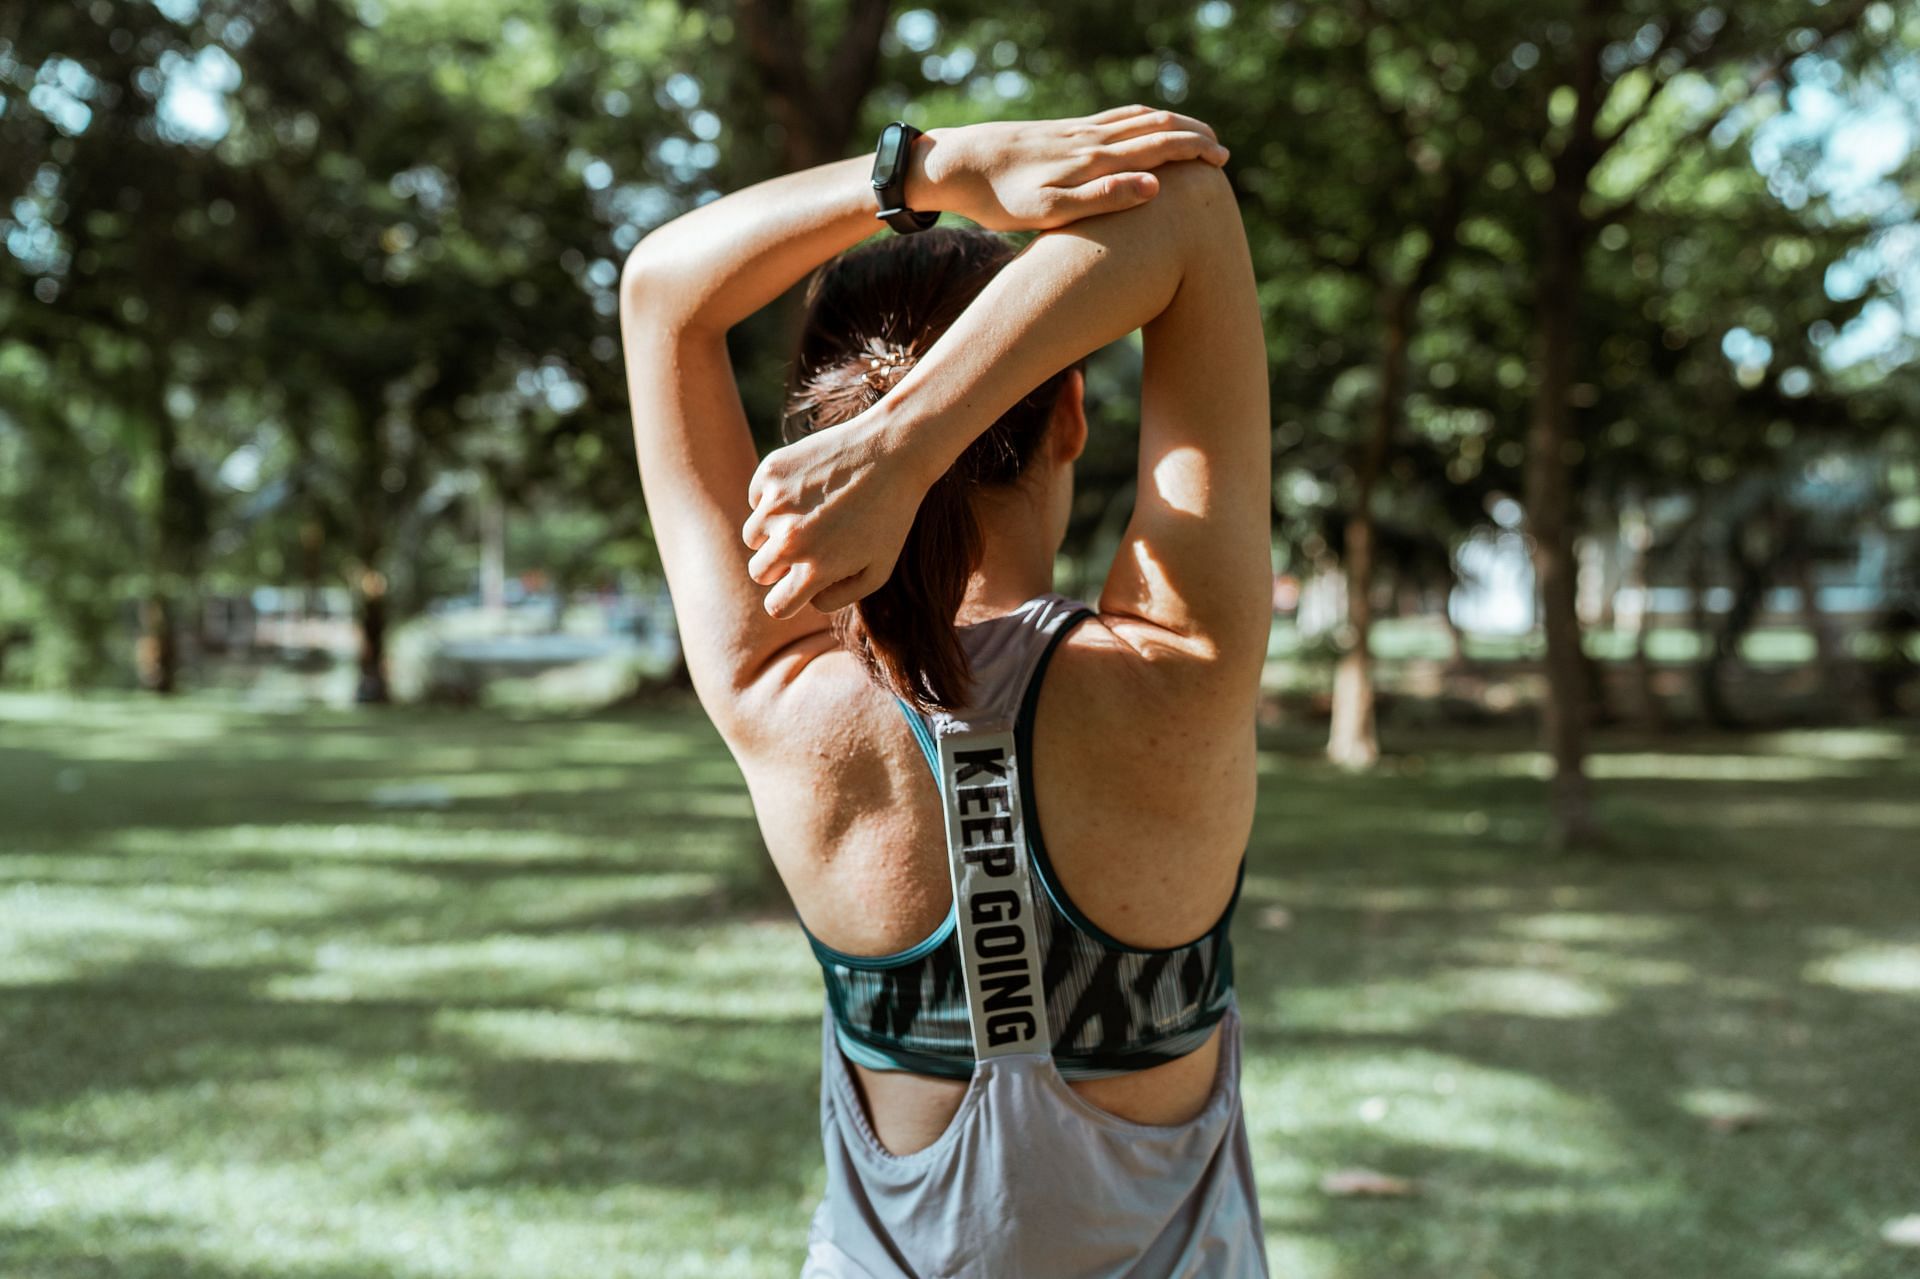 Stretching exercises for arm (Image via Pexels/Ketut Subiyanto)